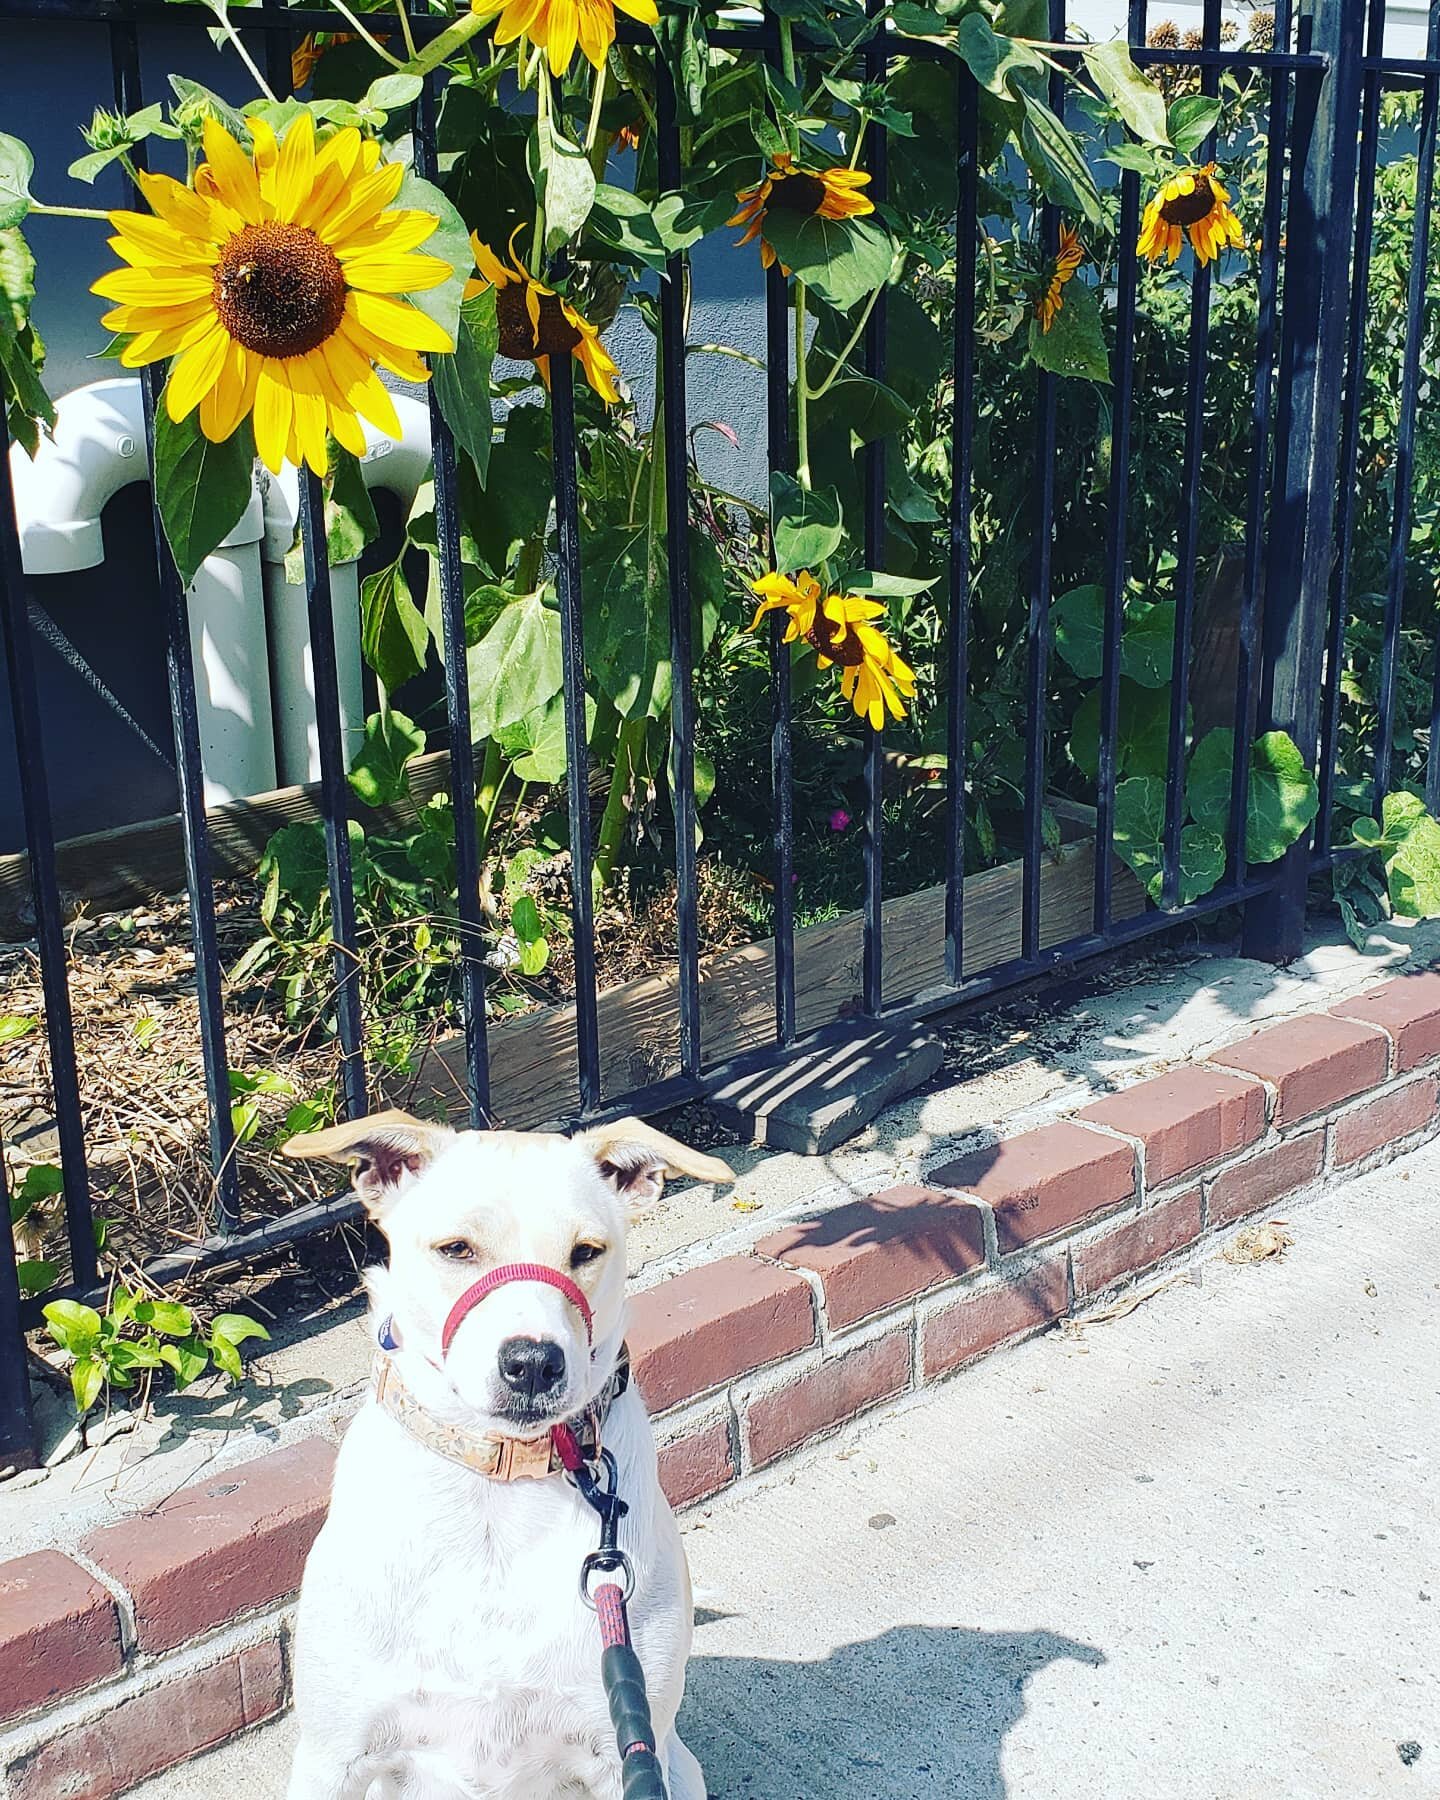 Molly and flowers are both designed to soak up sunlight! 🐶❤
#happydog #lovethisdog #responsiblewalkers #professionalpetcare #downtownjc #dogsofjerseycity #saferinapaccc #safedogwalking #jcdogs
#lovethisdog #jcdogwalkers #jcdogwalker #dogsjc #dogsofj